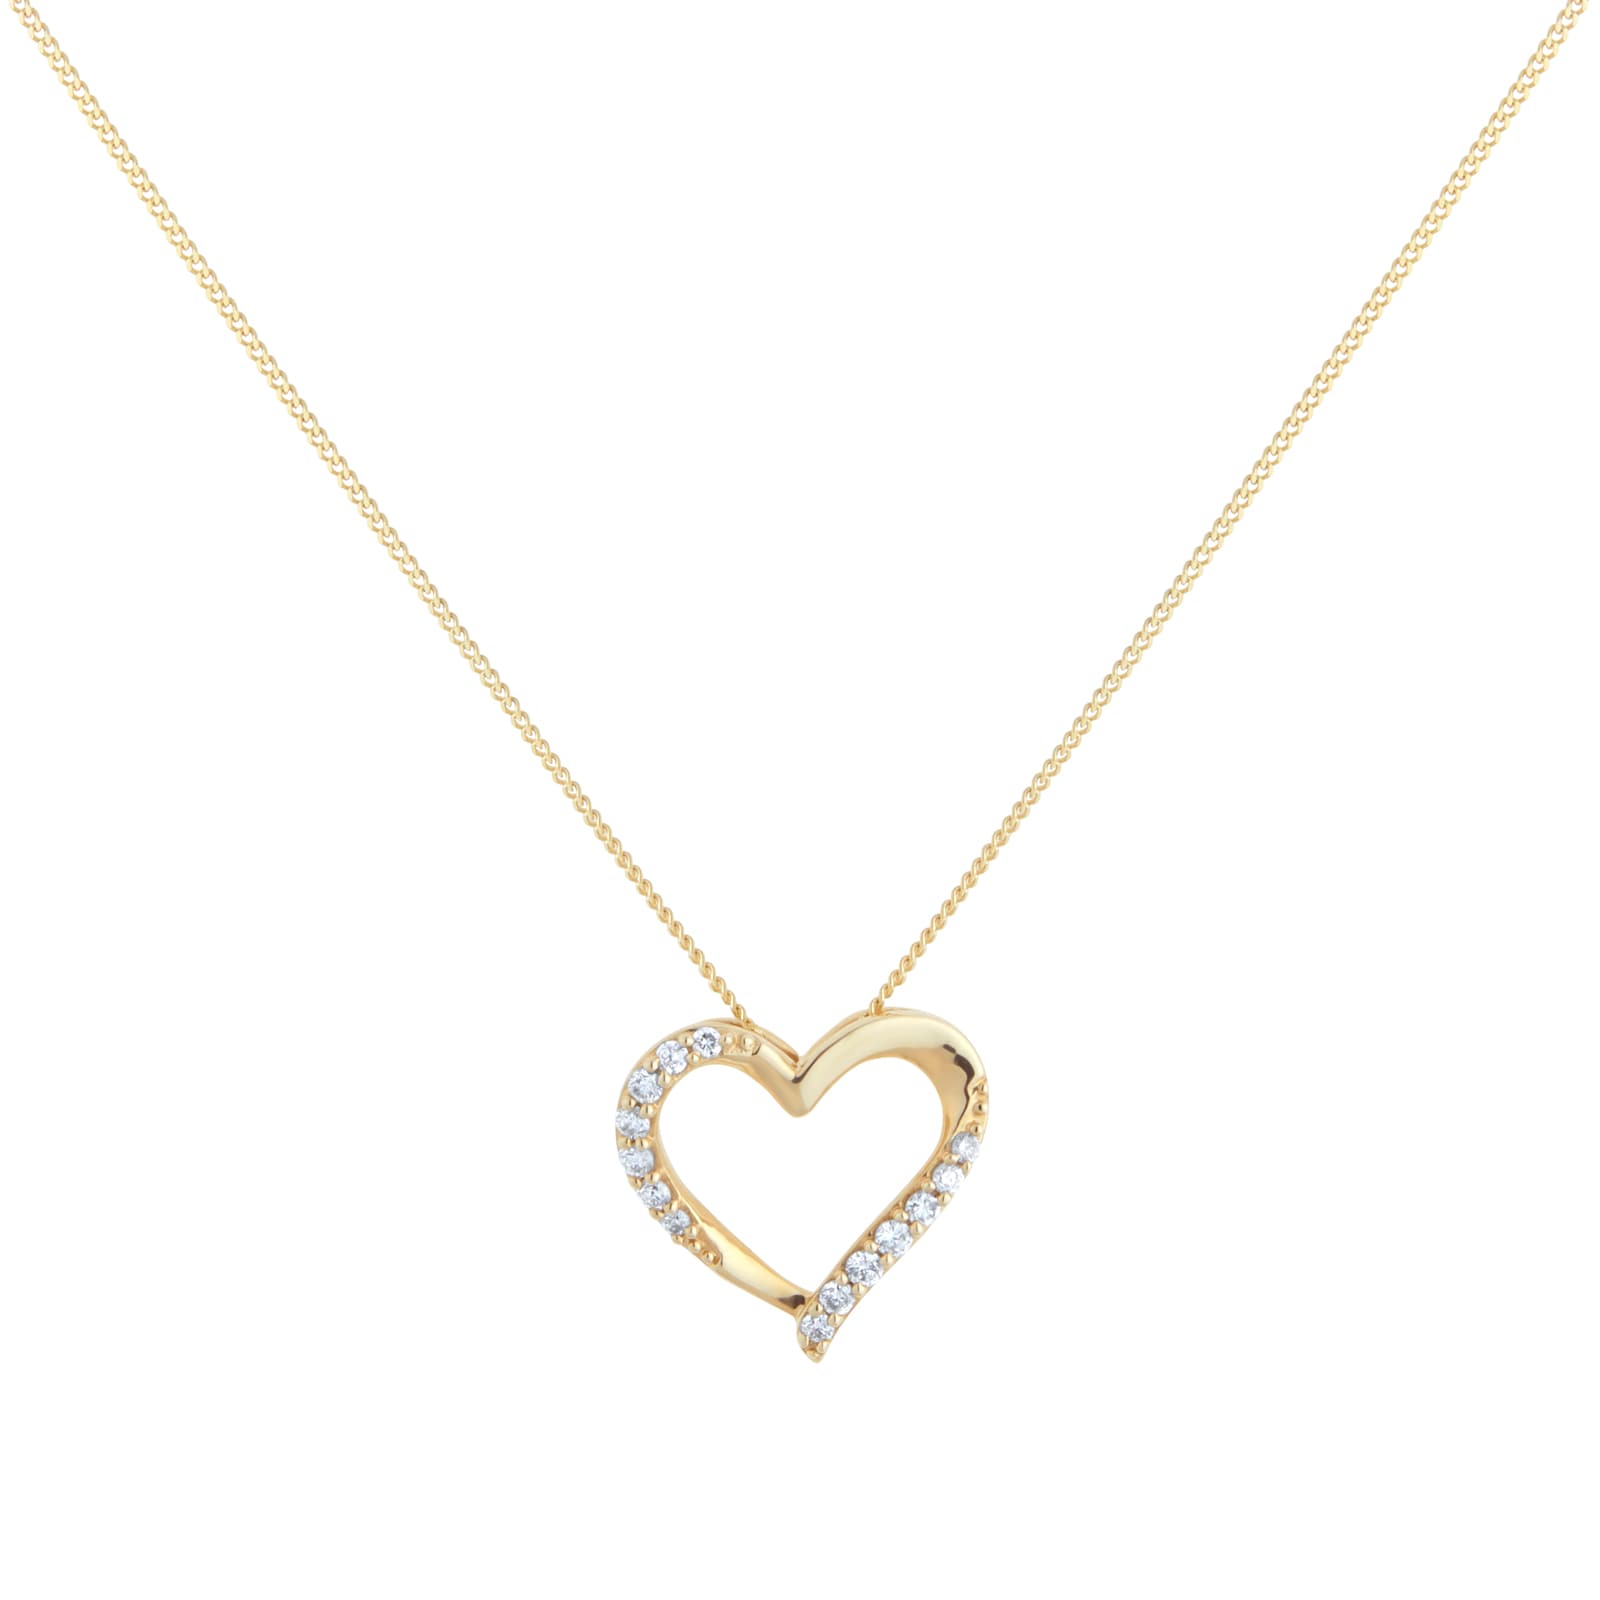 WARREN JAMES 18CT Gold Vermeil On Silver Heart Necklace £15.00 - PicClick UK